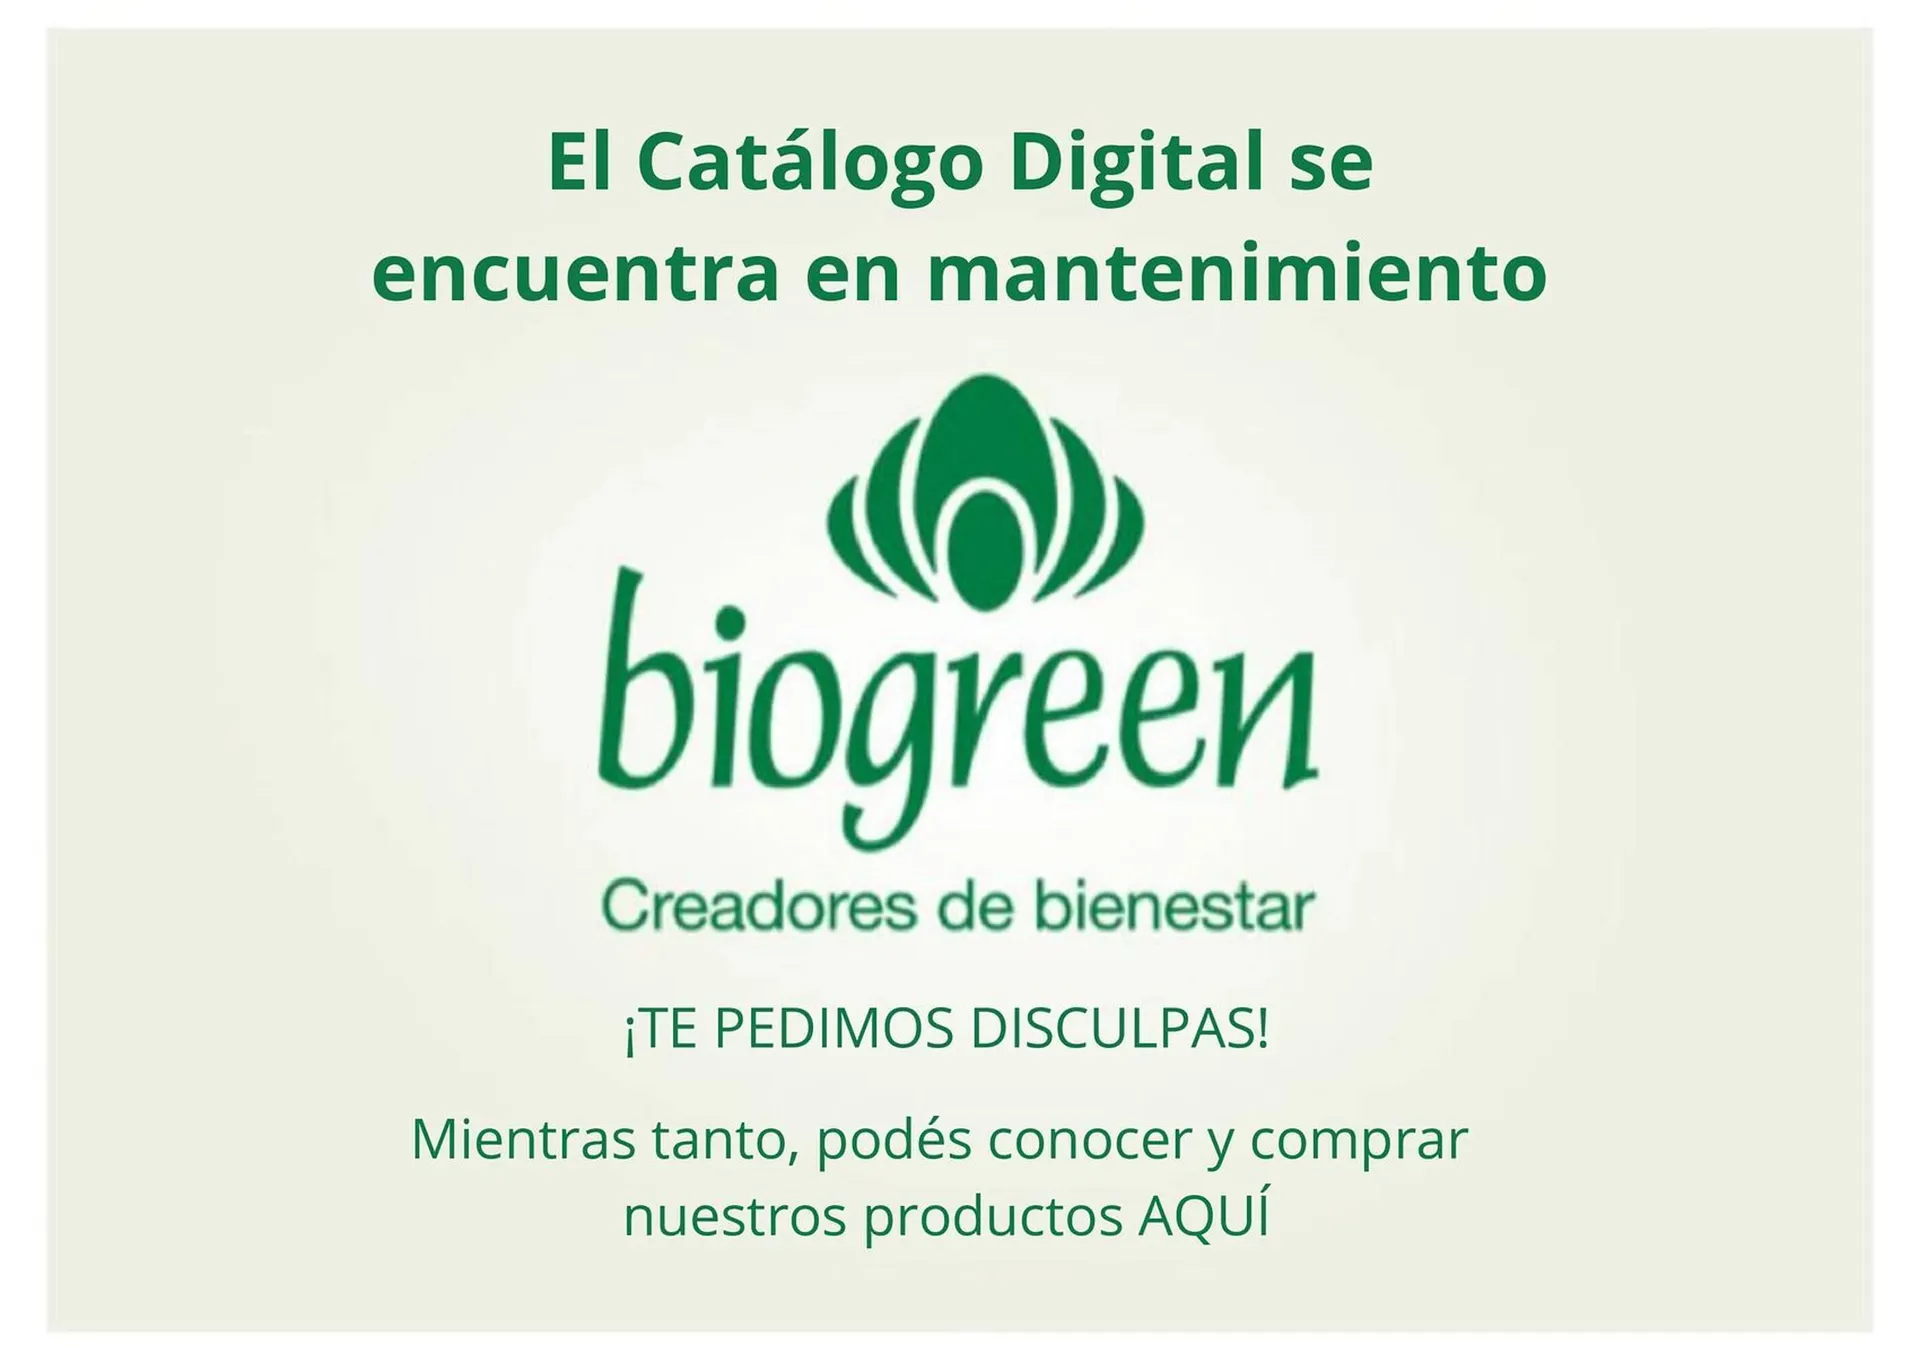 Ofertas de Catálogo Biogreen 21 de diciembre al 25 de diciembre 2023 - Página 1 del catálogo